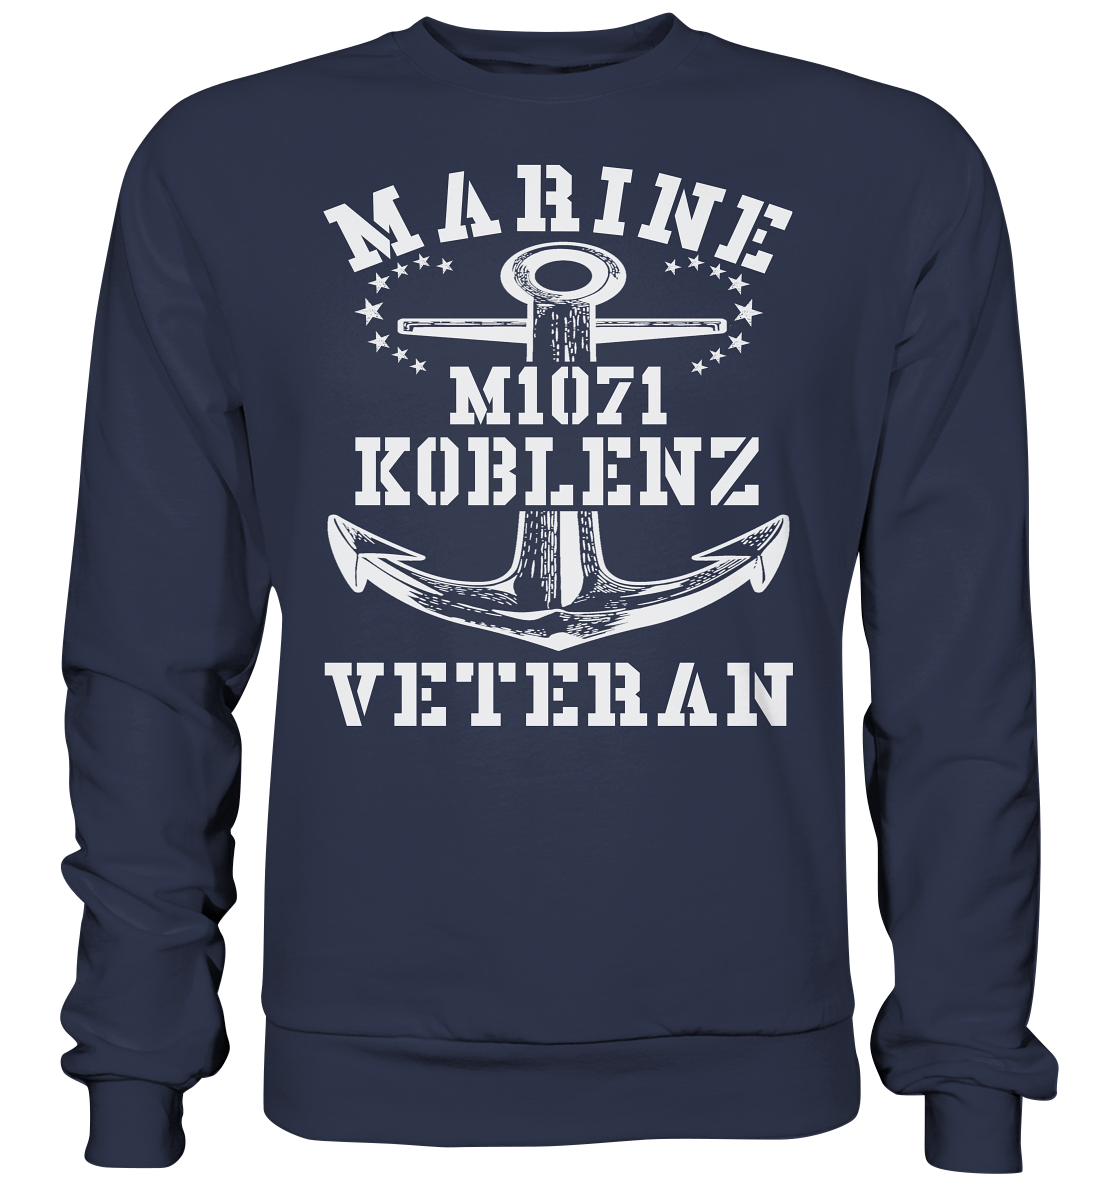 MARINE VETERAN M1071 KOBLENZ - Premium Sweatshirt